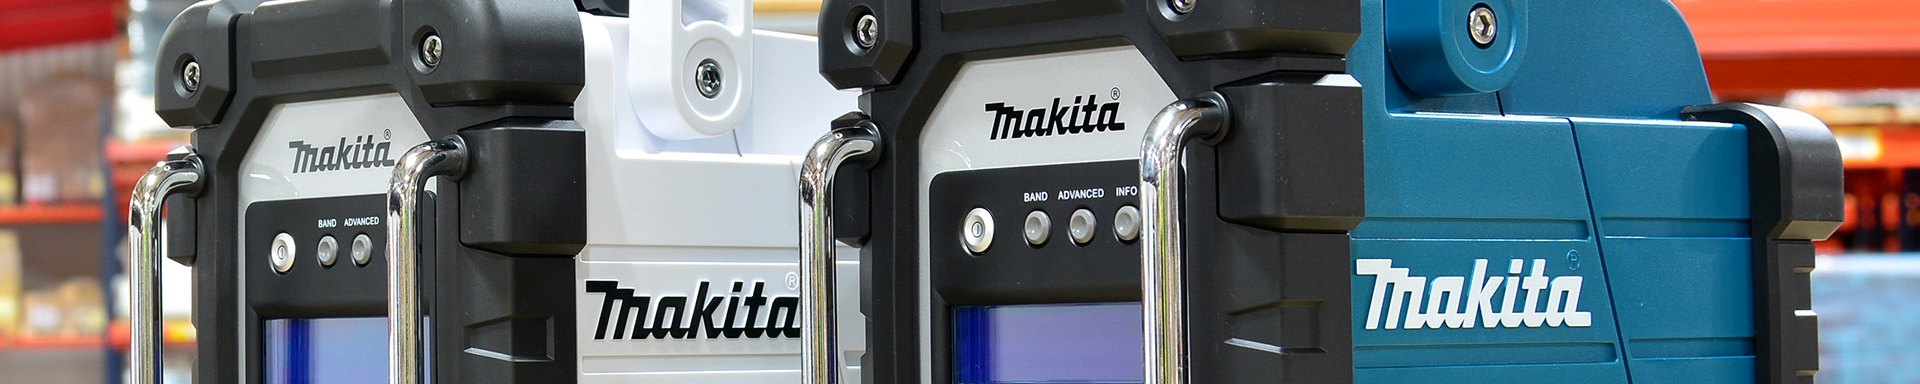 Makita Portable Radios